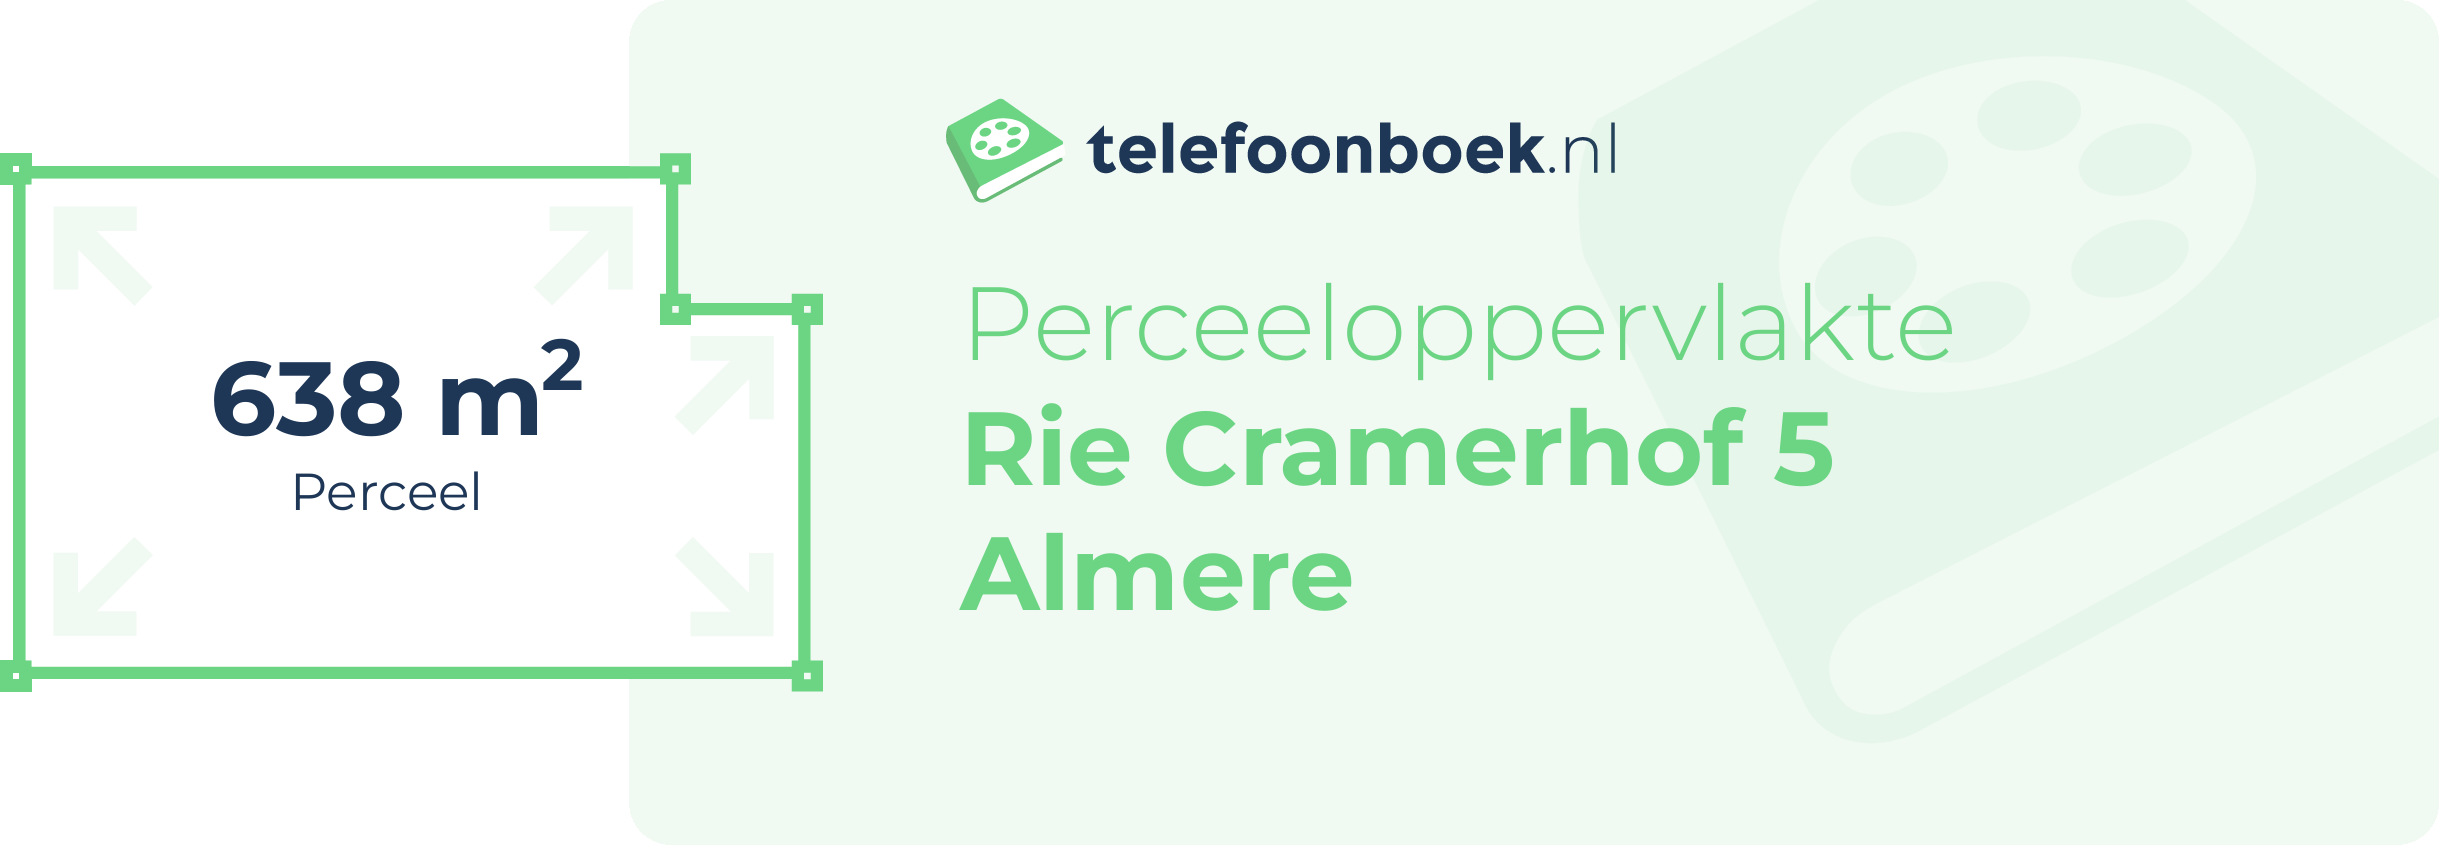 Perceeloppervlakte Rie Cramerhof 5 Almere